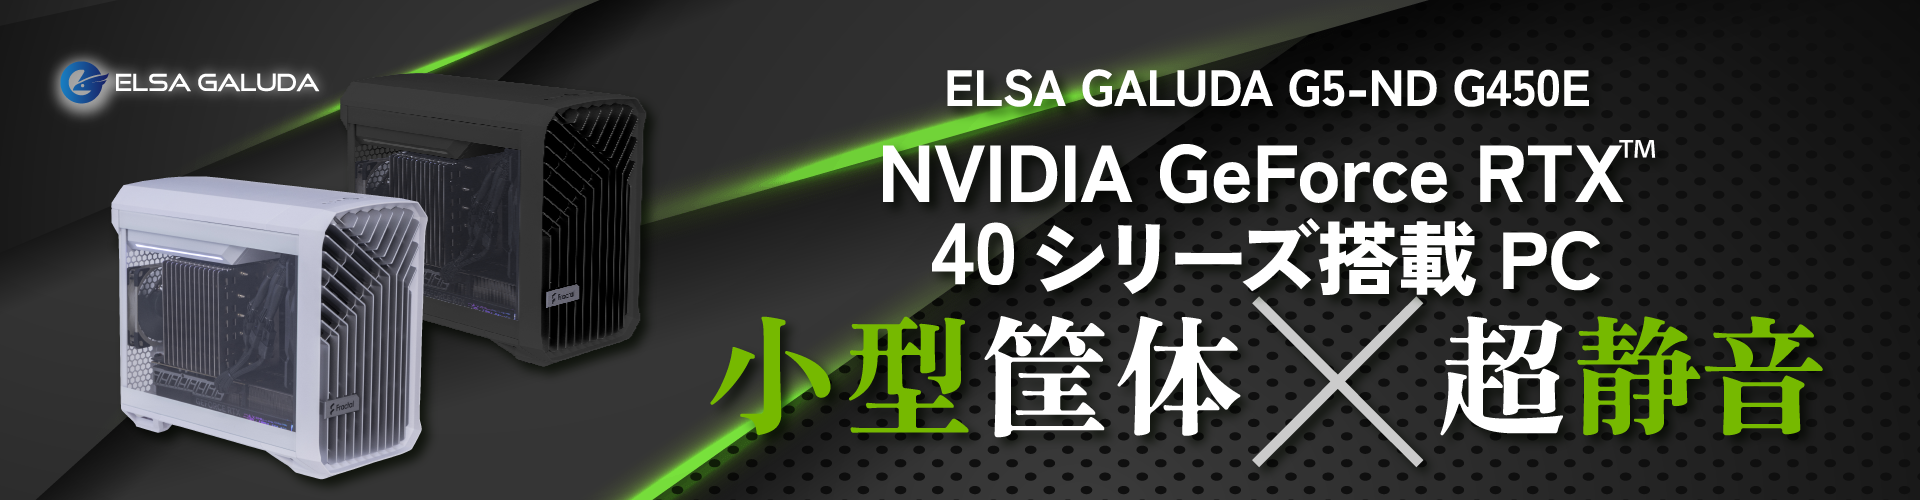 小型×超静音 ELSA GALUDA G5-ND G450E